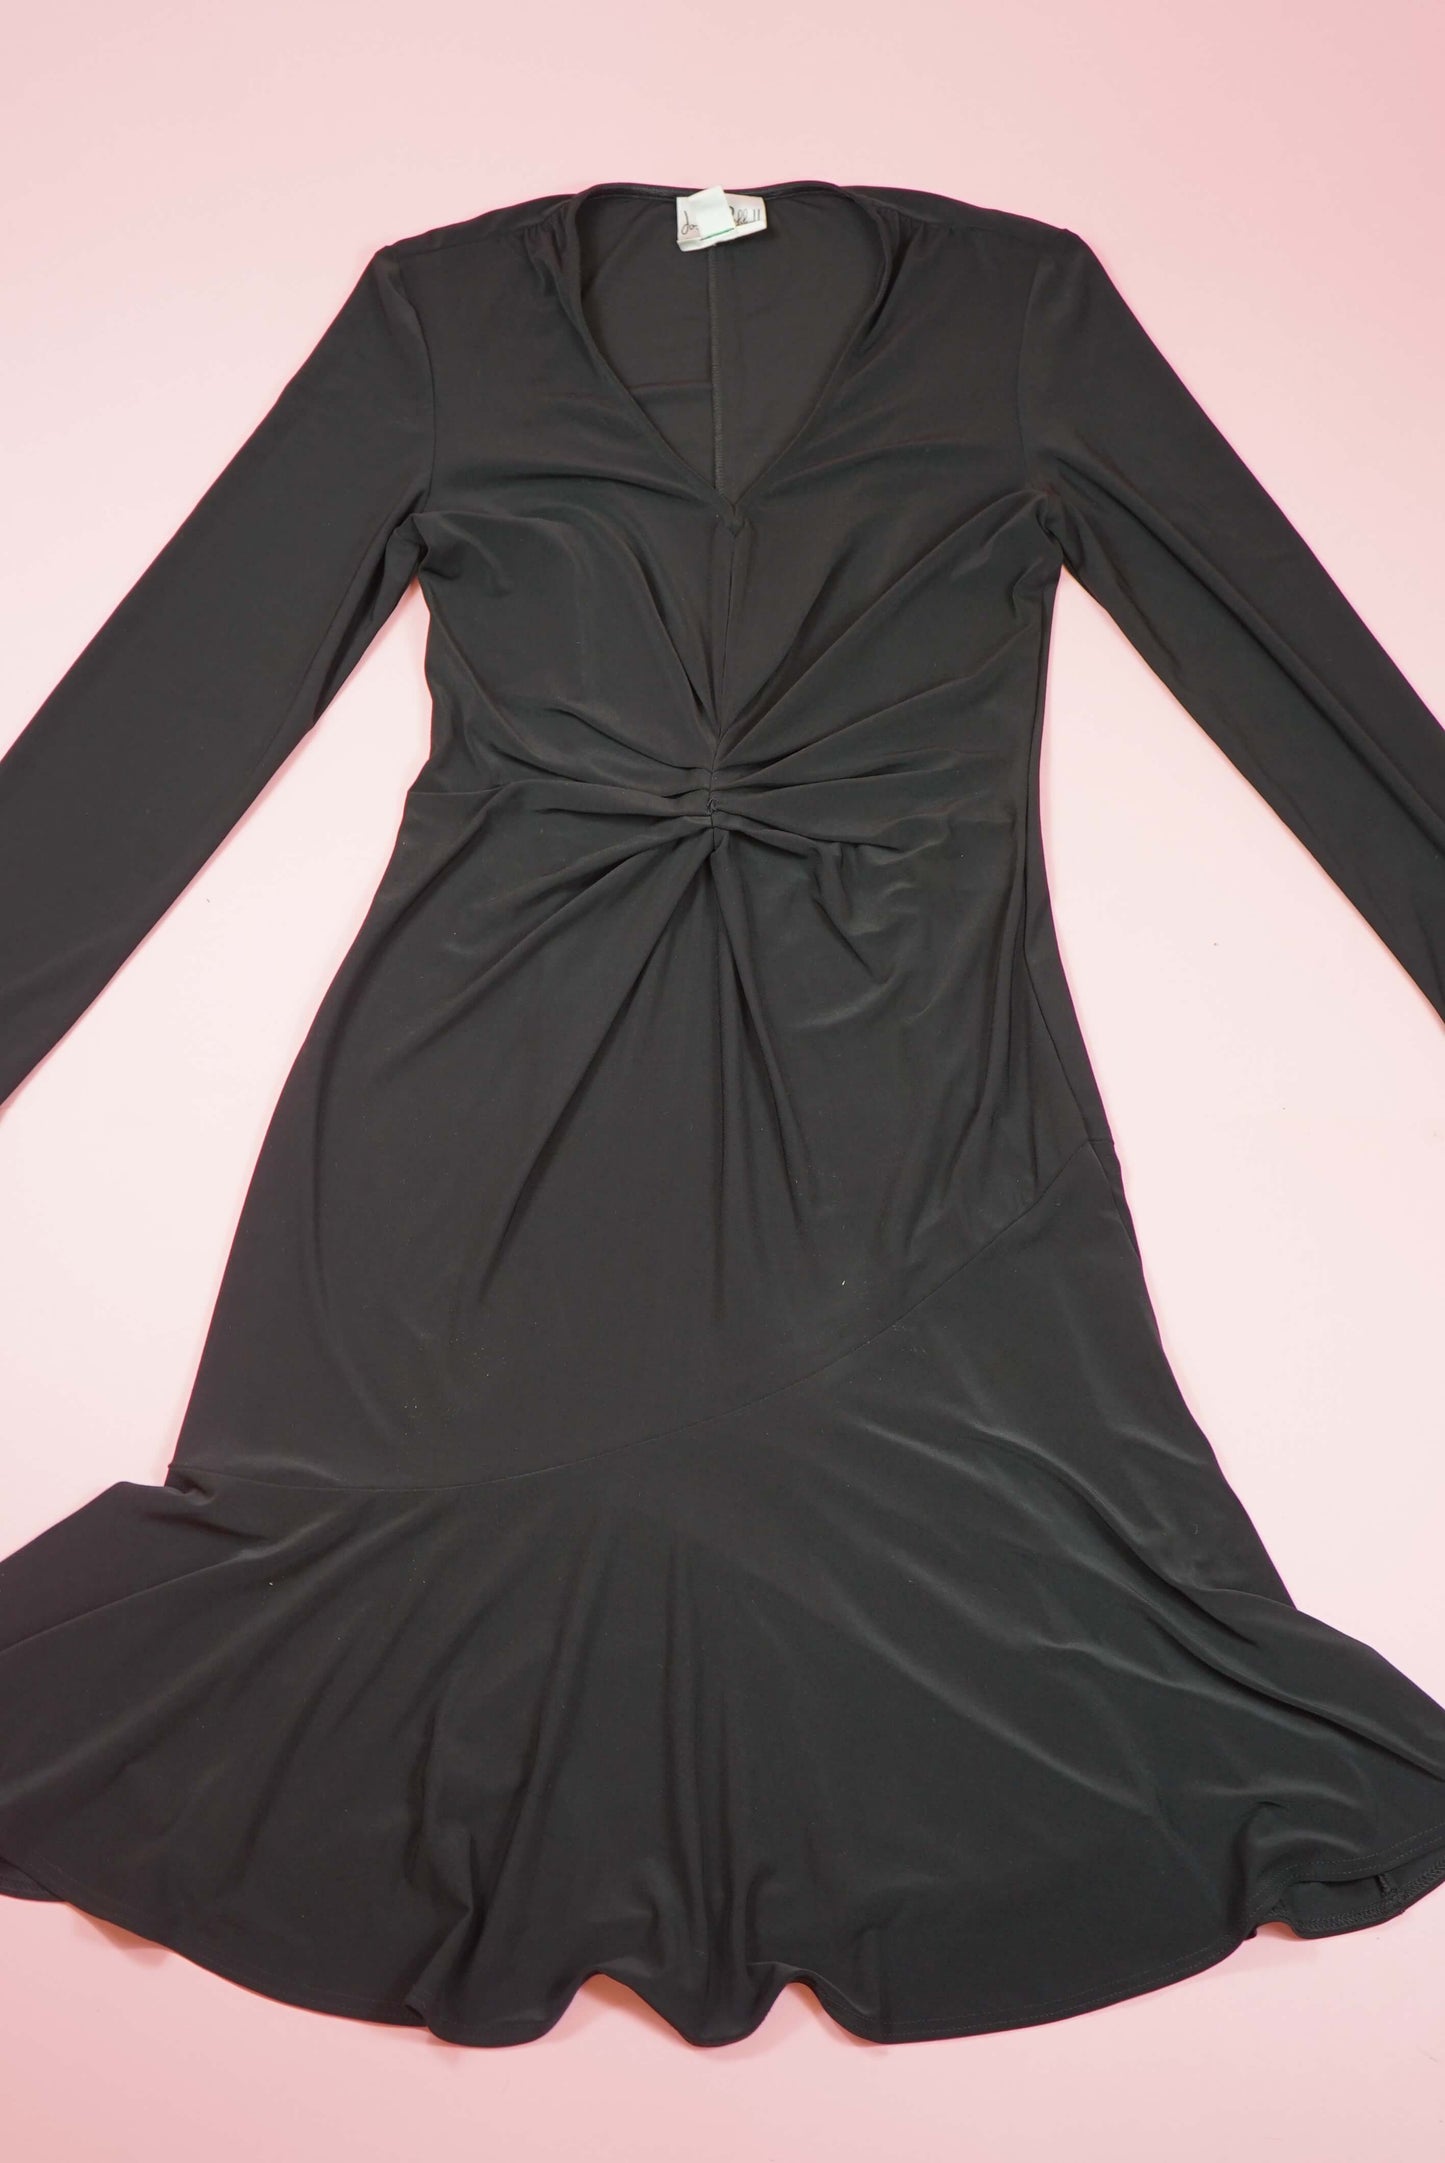 Black Elegant Dress Jersey Midi Dress Long Sleeves Vintage UK Size 12/ EU 40